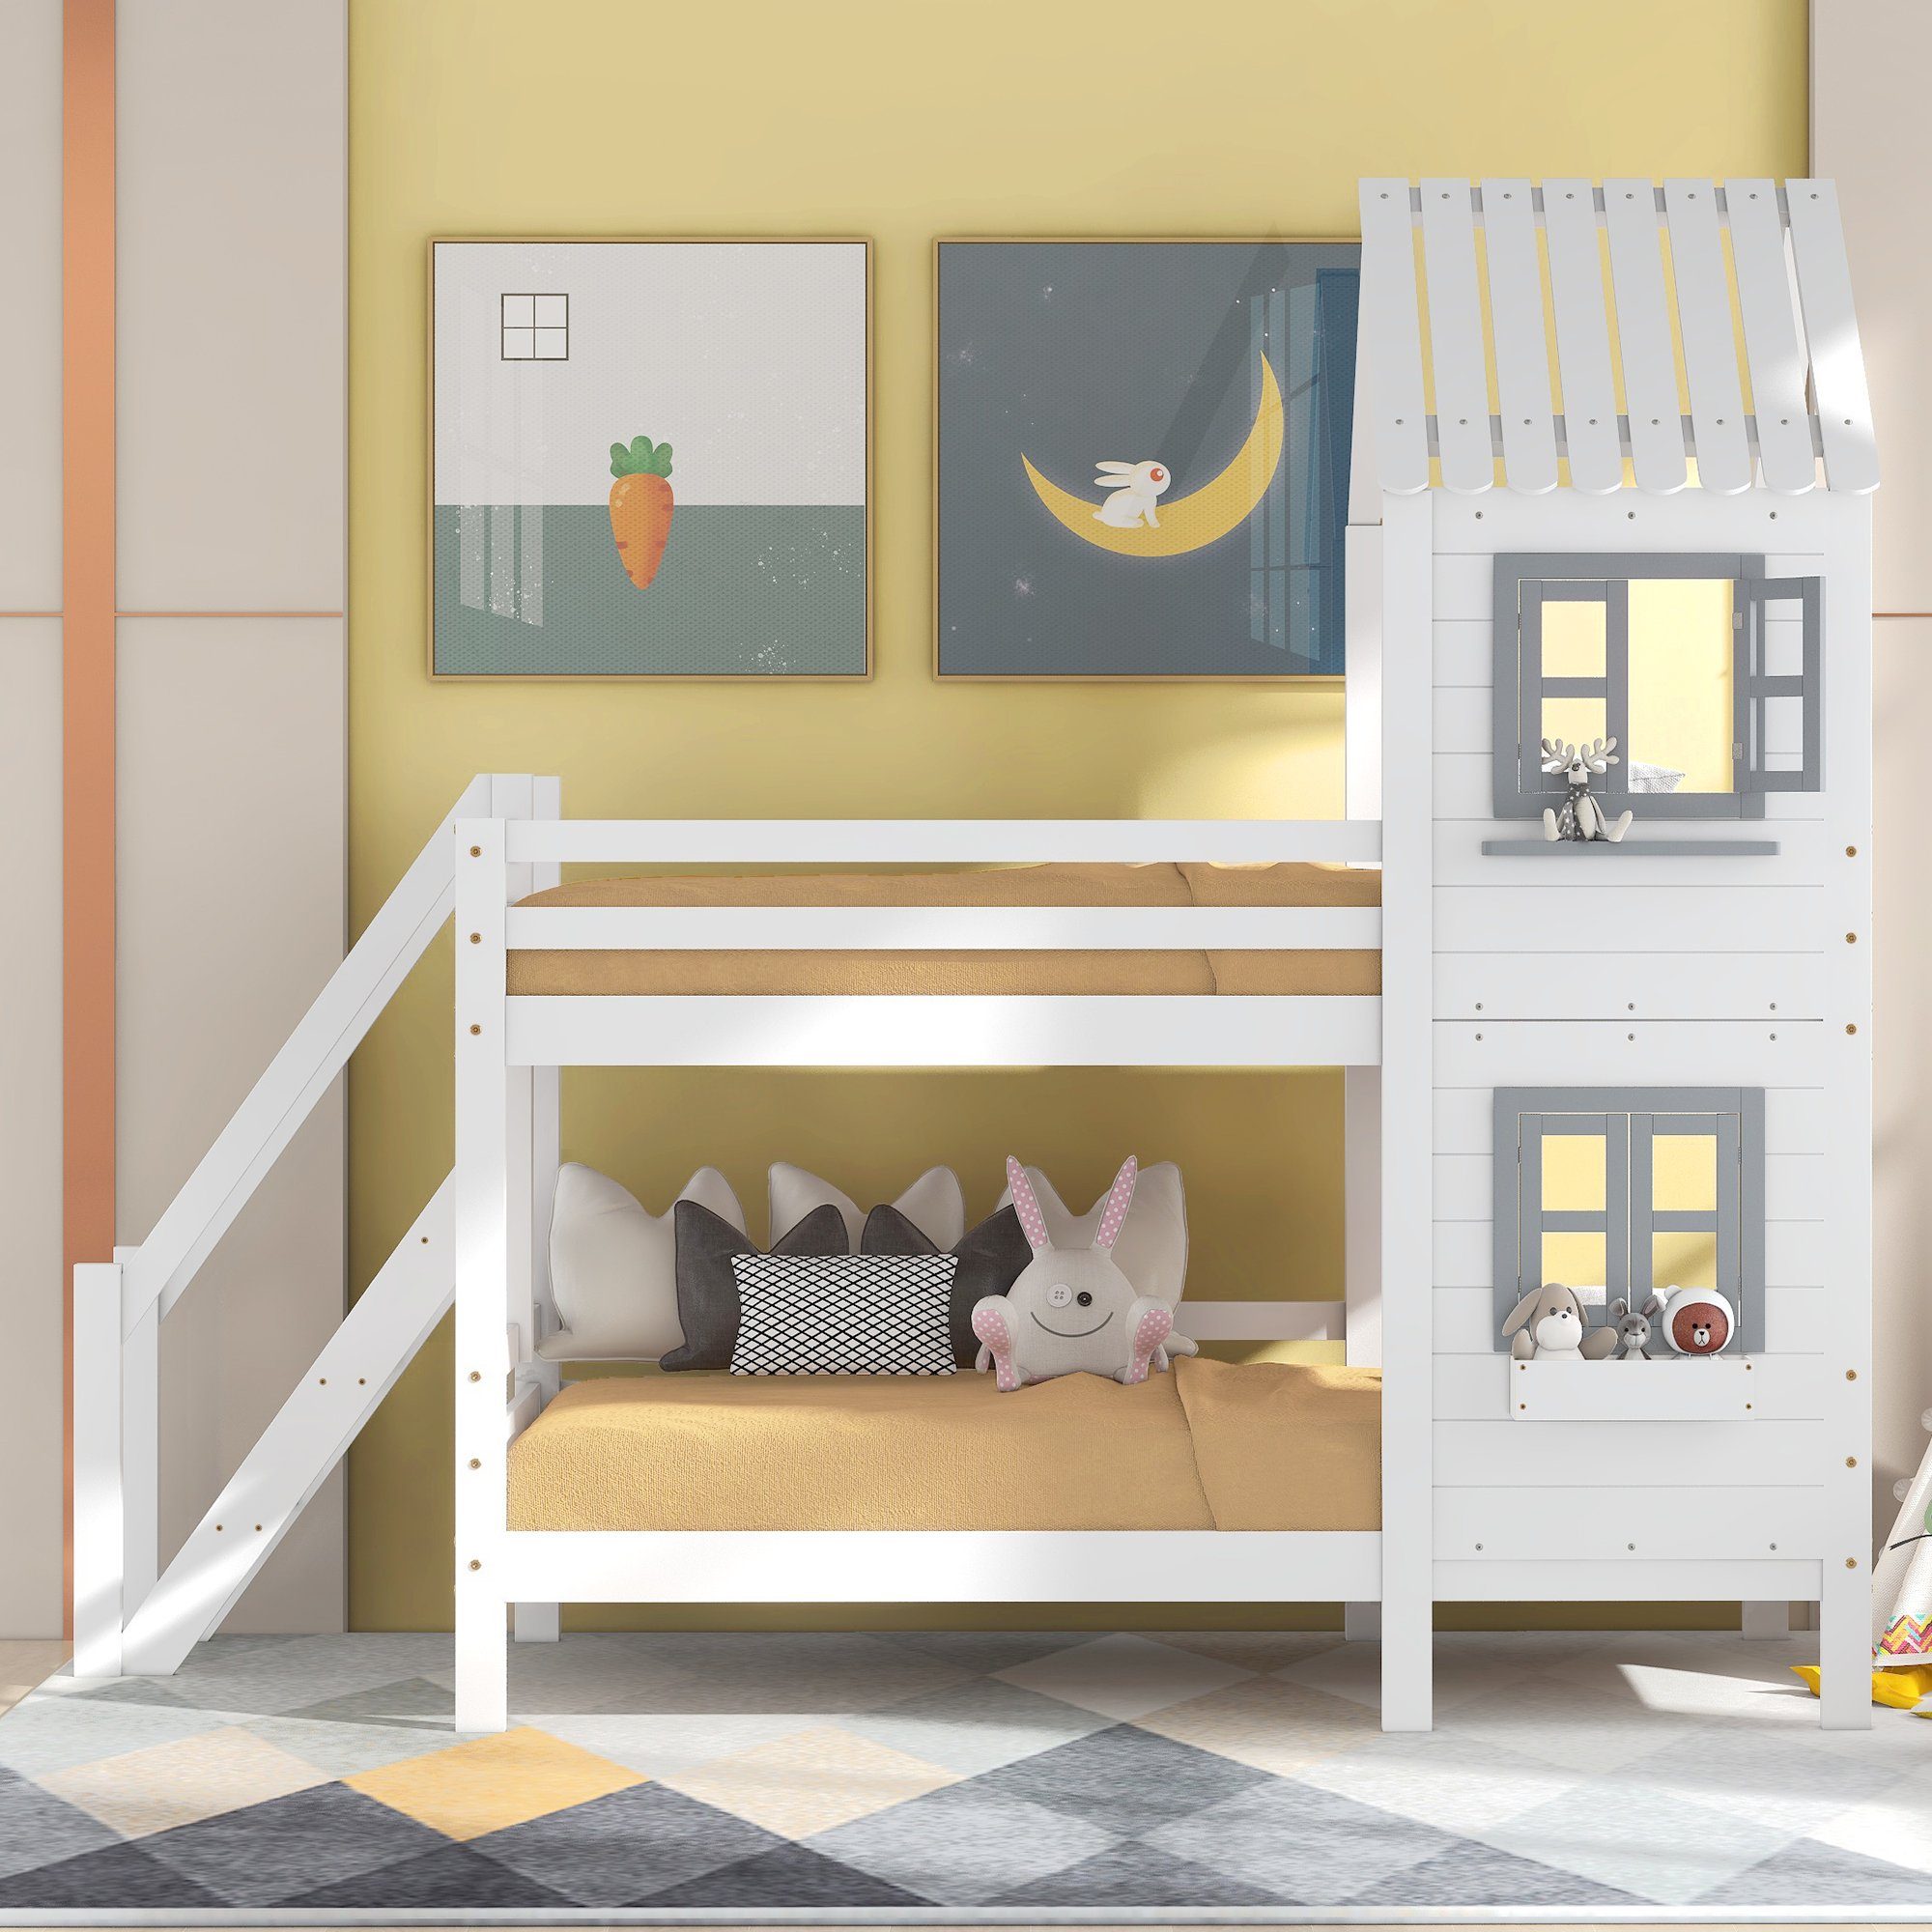 SIKAINI Kinderbett A-DJ-N622-29590567WAA (set, 1-tlg., mit Lattenrost), Etagenbett mit Handlauf und Fenster, Kinderbett mit Fallschutz und Gitter, Rahmen aus Kiefer, weiß (90x200cm)